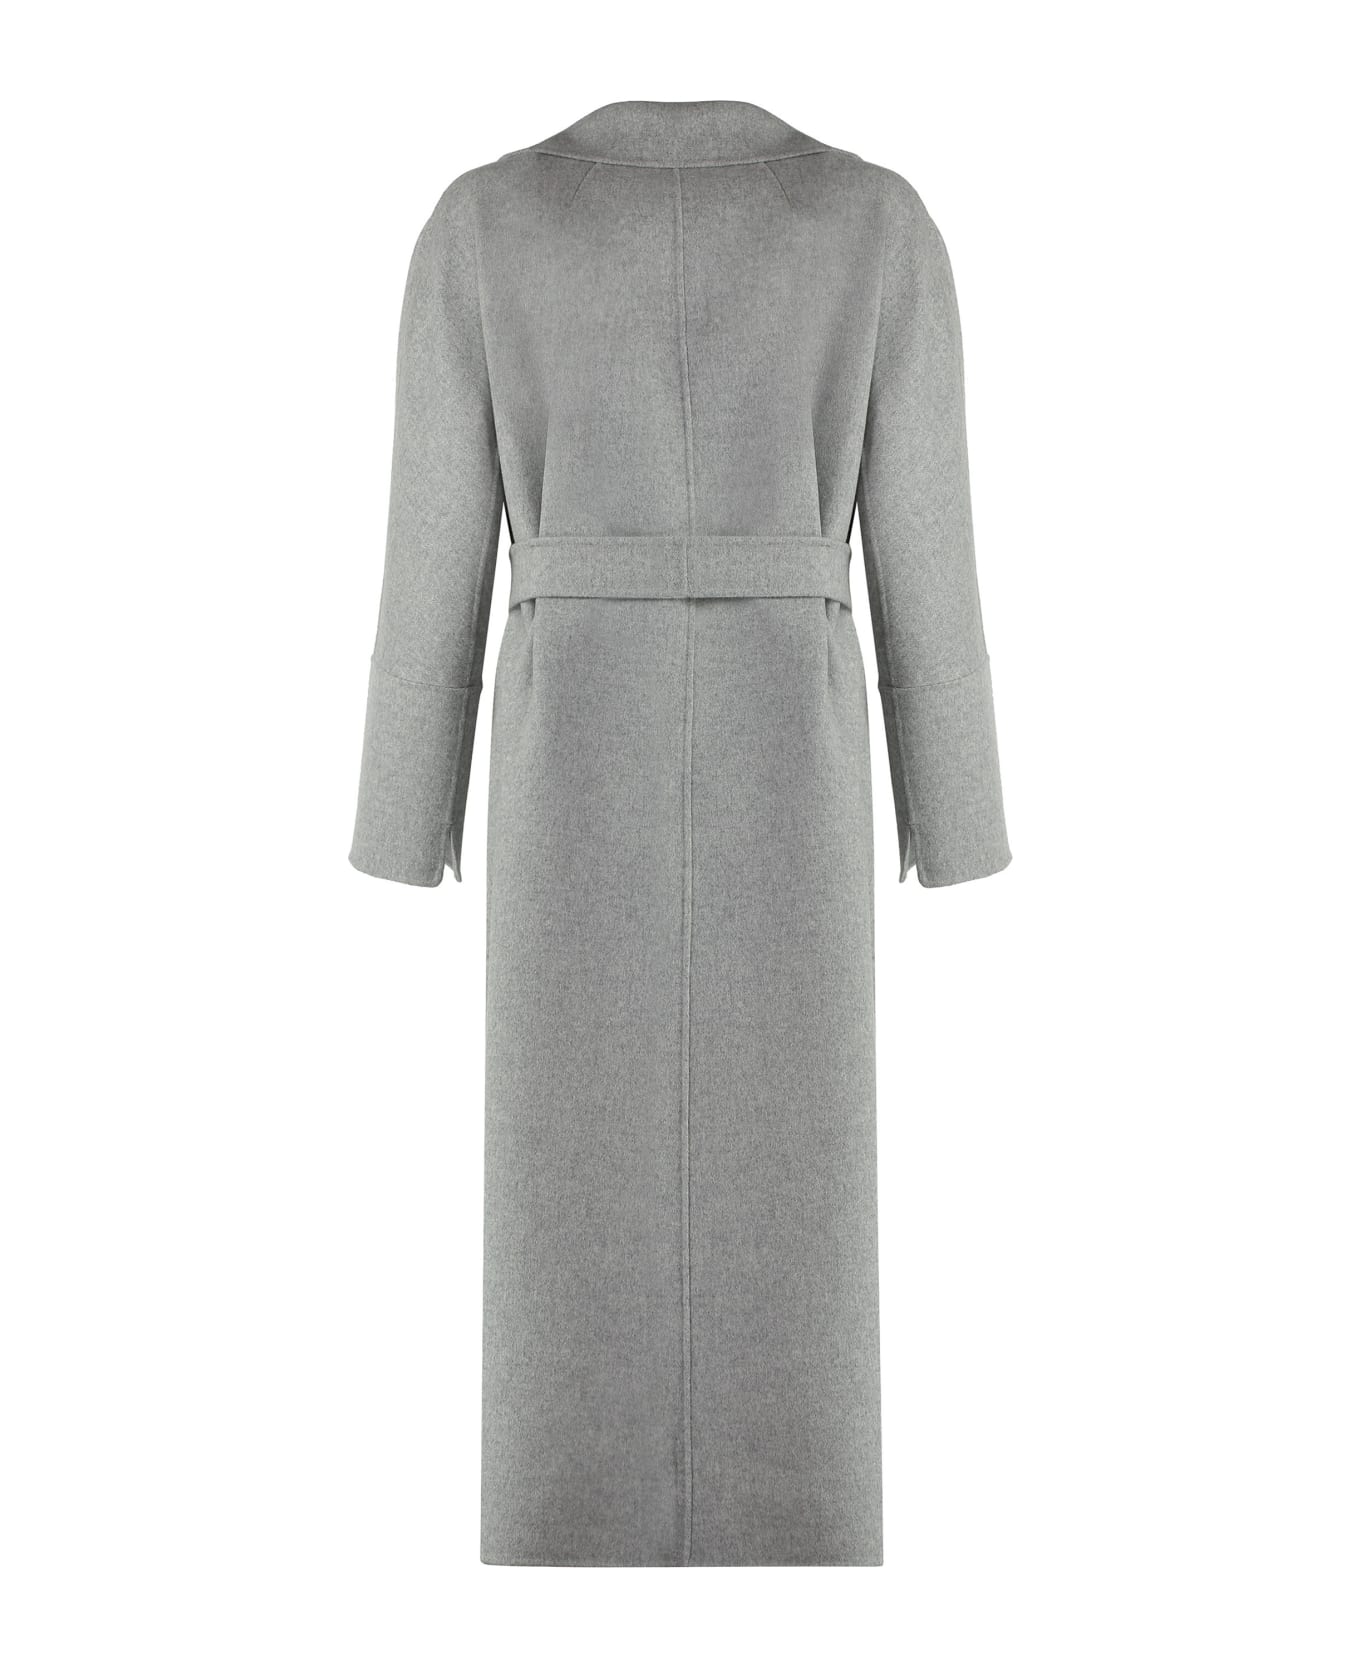 'S Max Mara Wool Robe Coat - Grey